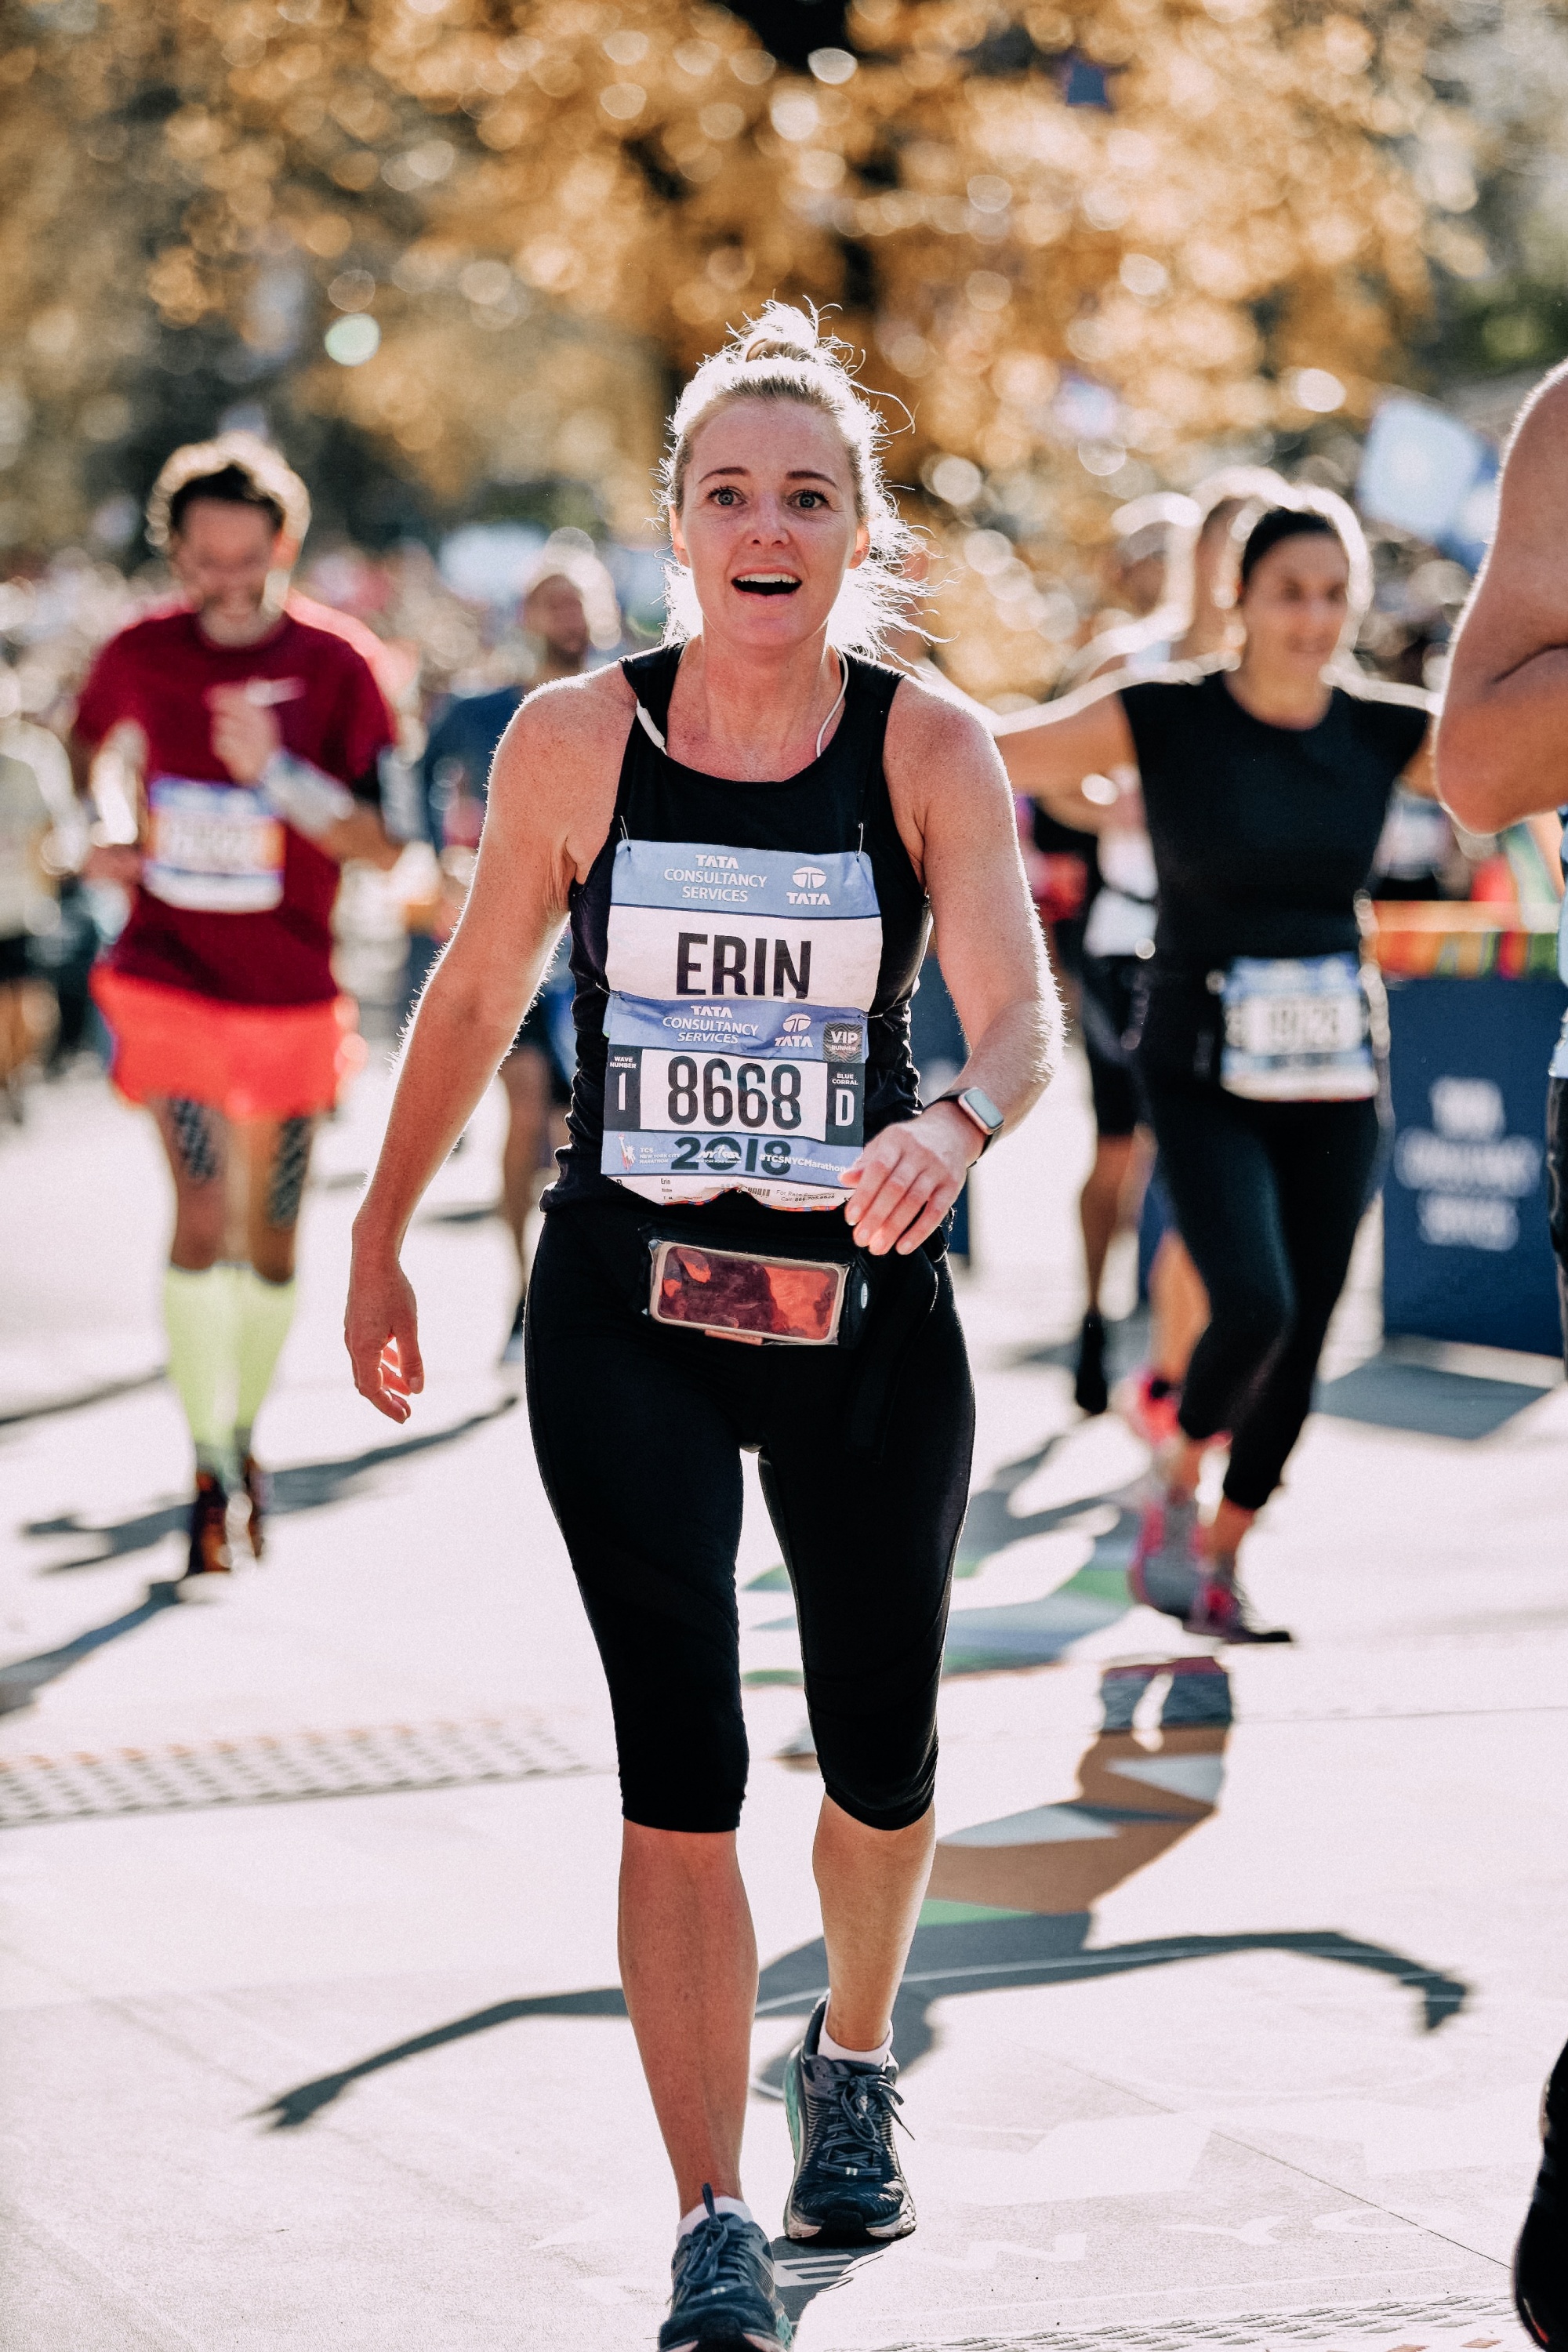 NYC Marathon 2018 fashion blogger Erin Busbee race experience